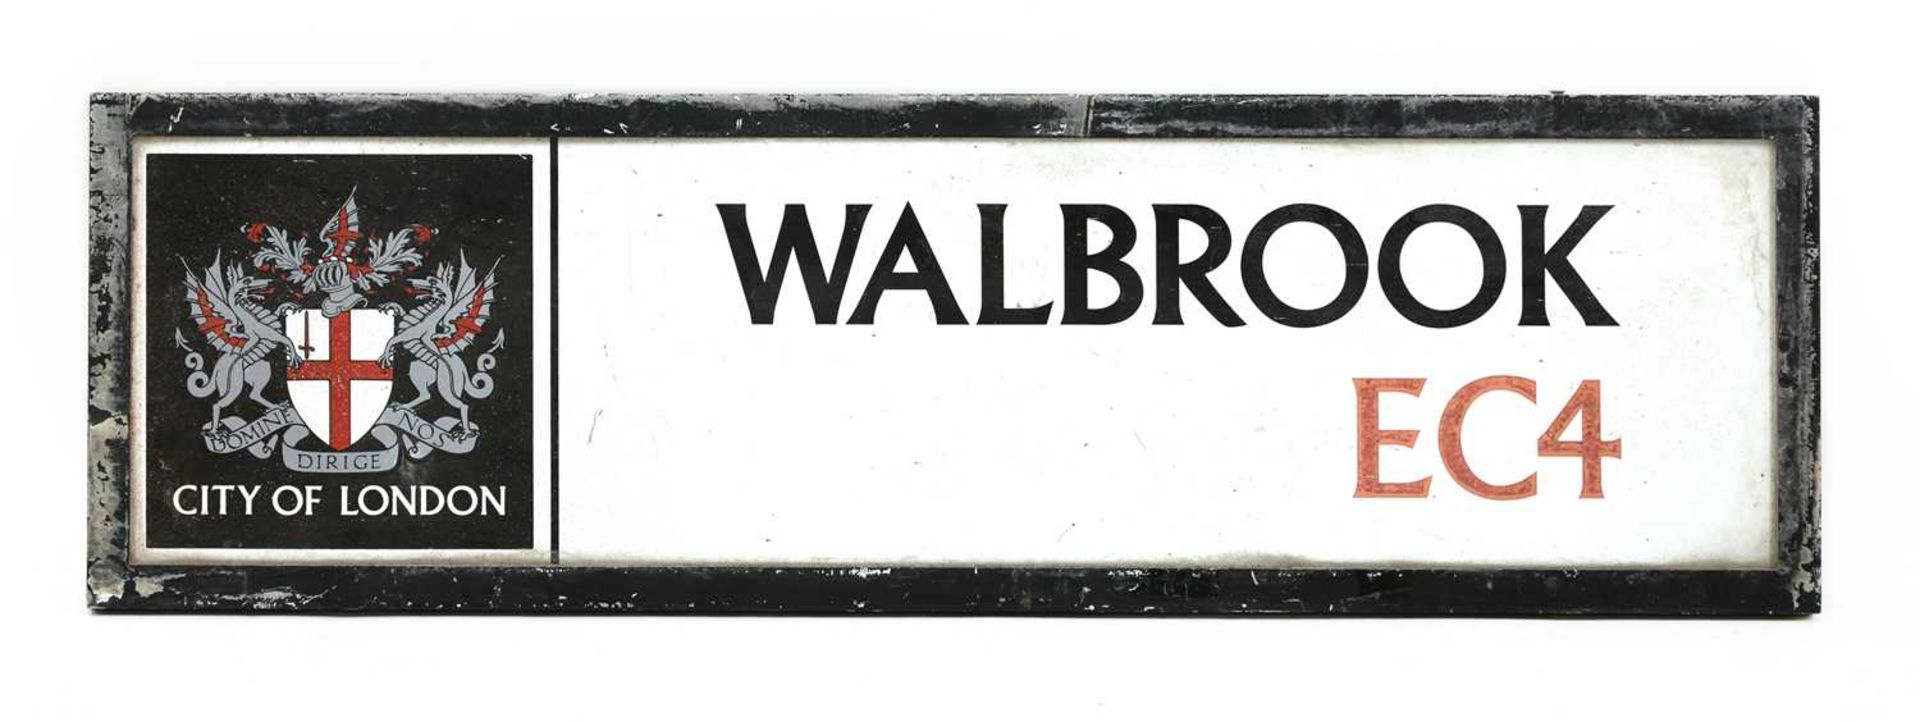 AN ENAMEL CITY OF LONDON STREET SIGN FOR WALBROOK EC4,